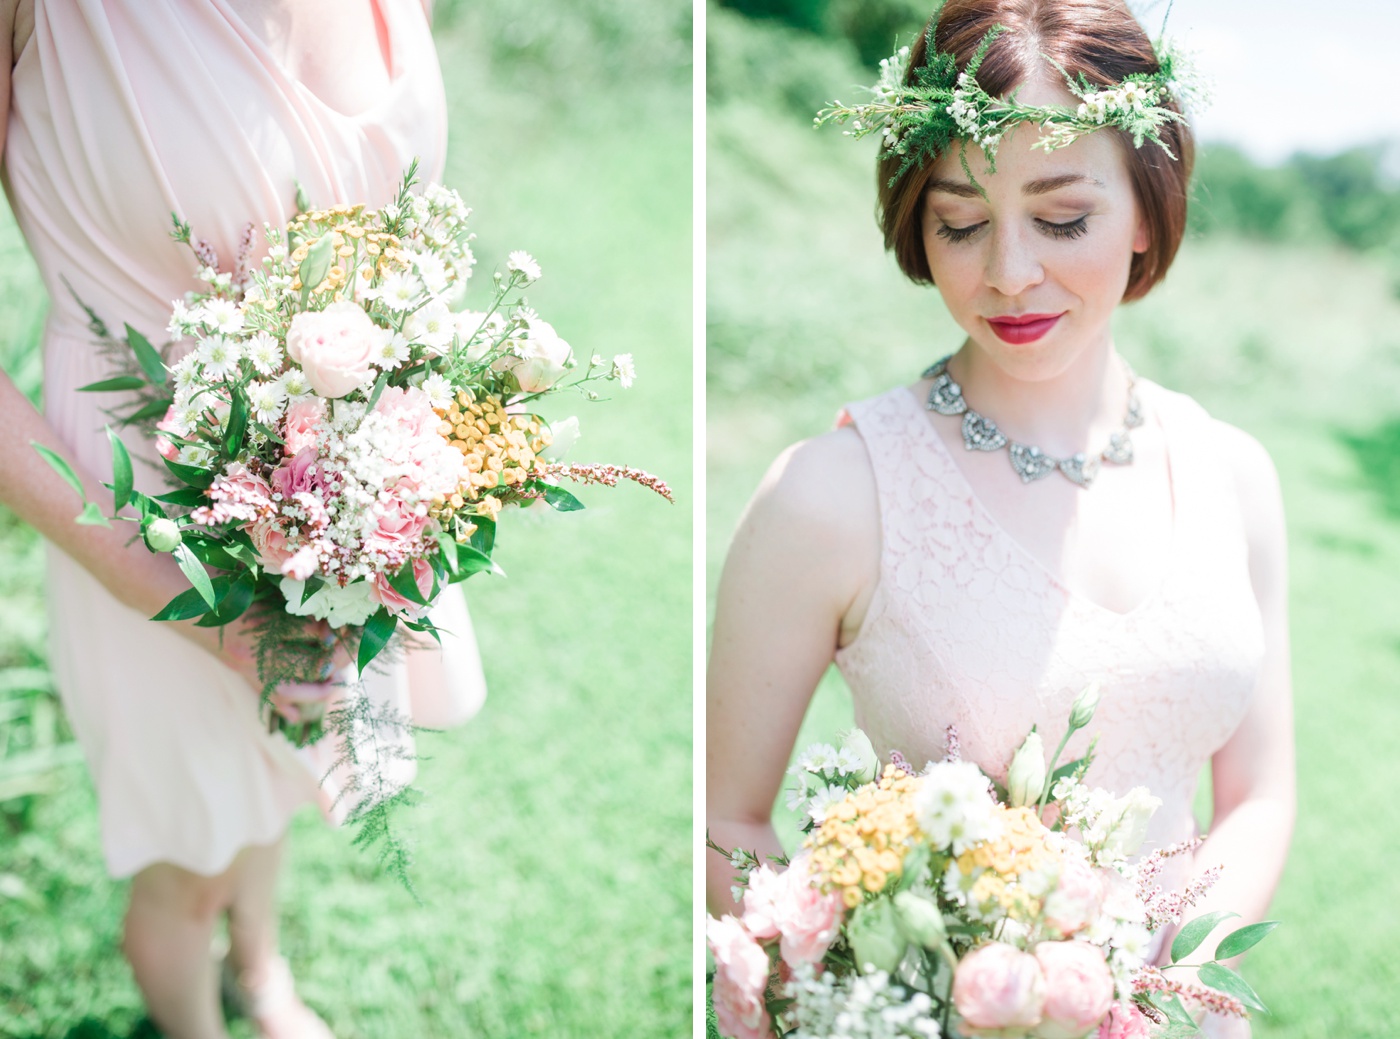 Blush Pink Mixed Bridesmaid Dresses - Flower Crowns photo